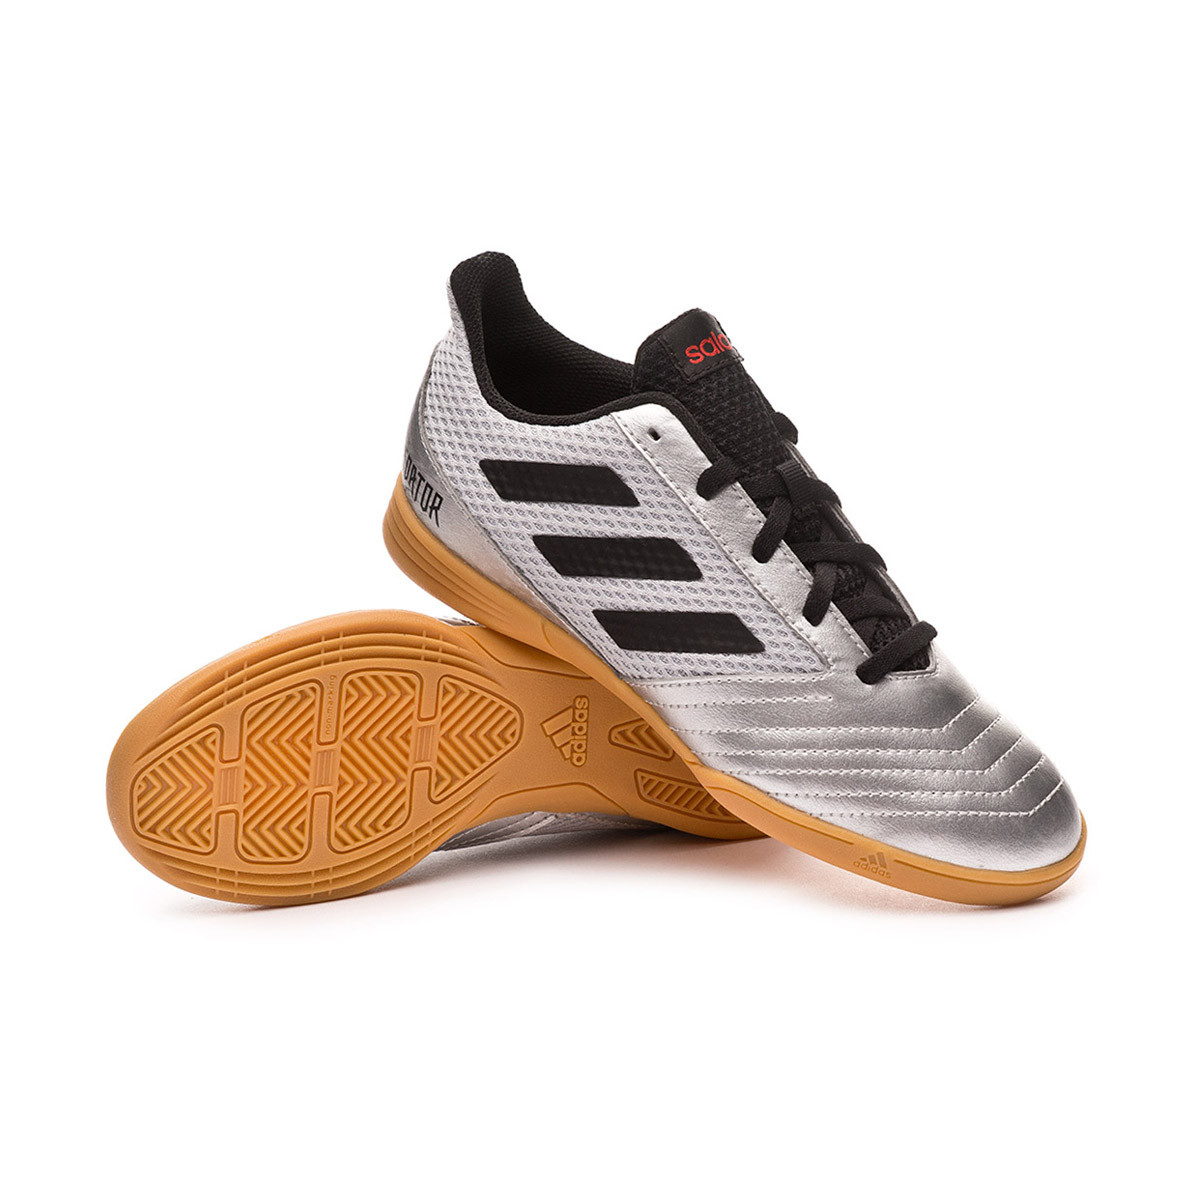 Zapatillas Adidas Futbol Sala Niño Clearance Sale, UP TO 56% OFF ... الذهب الايطالي